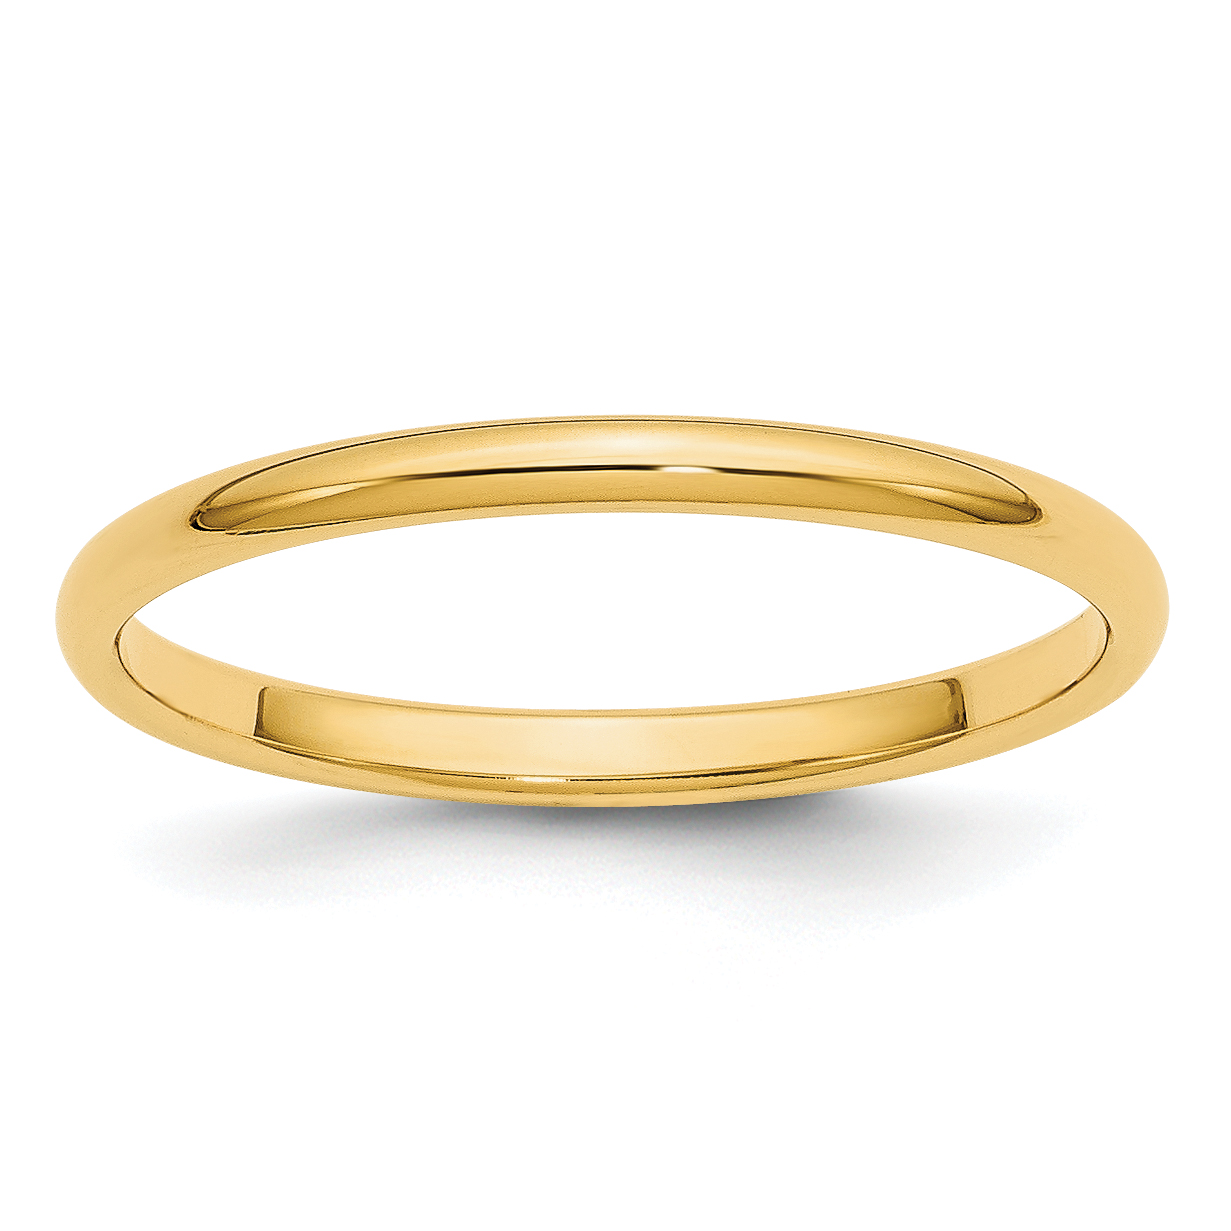 14k Yellow Gold 2mm Half Round Wedding Ring Band Size 9.5 Man Classic